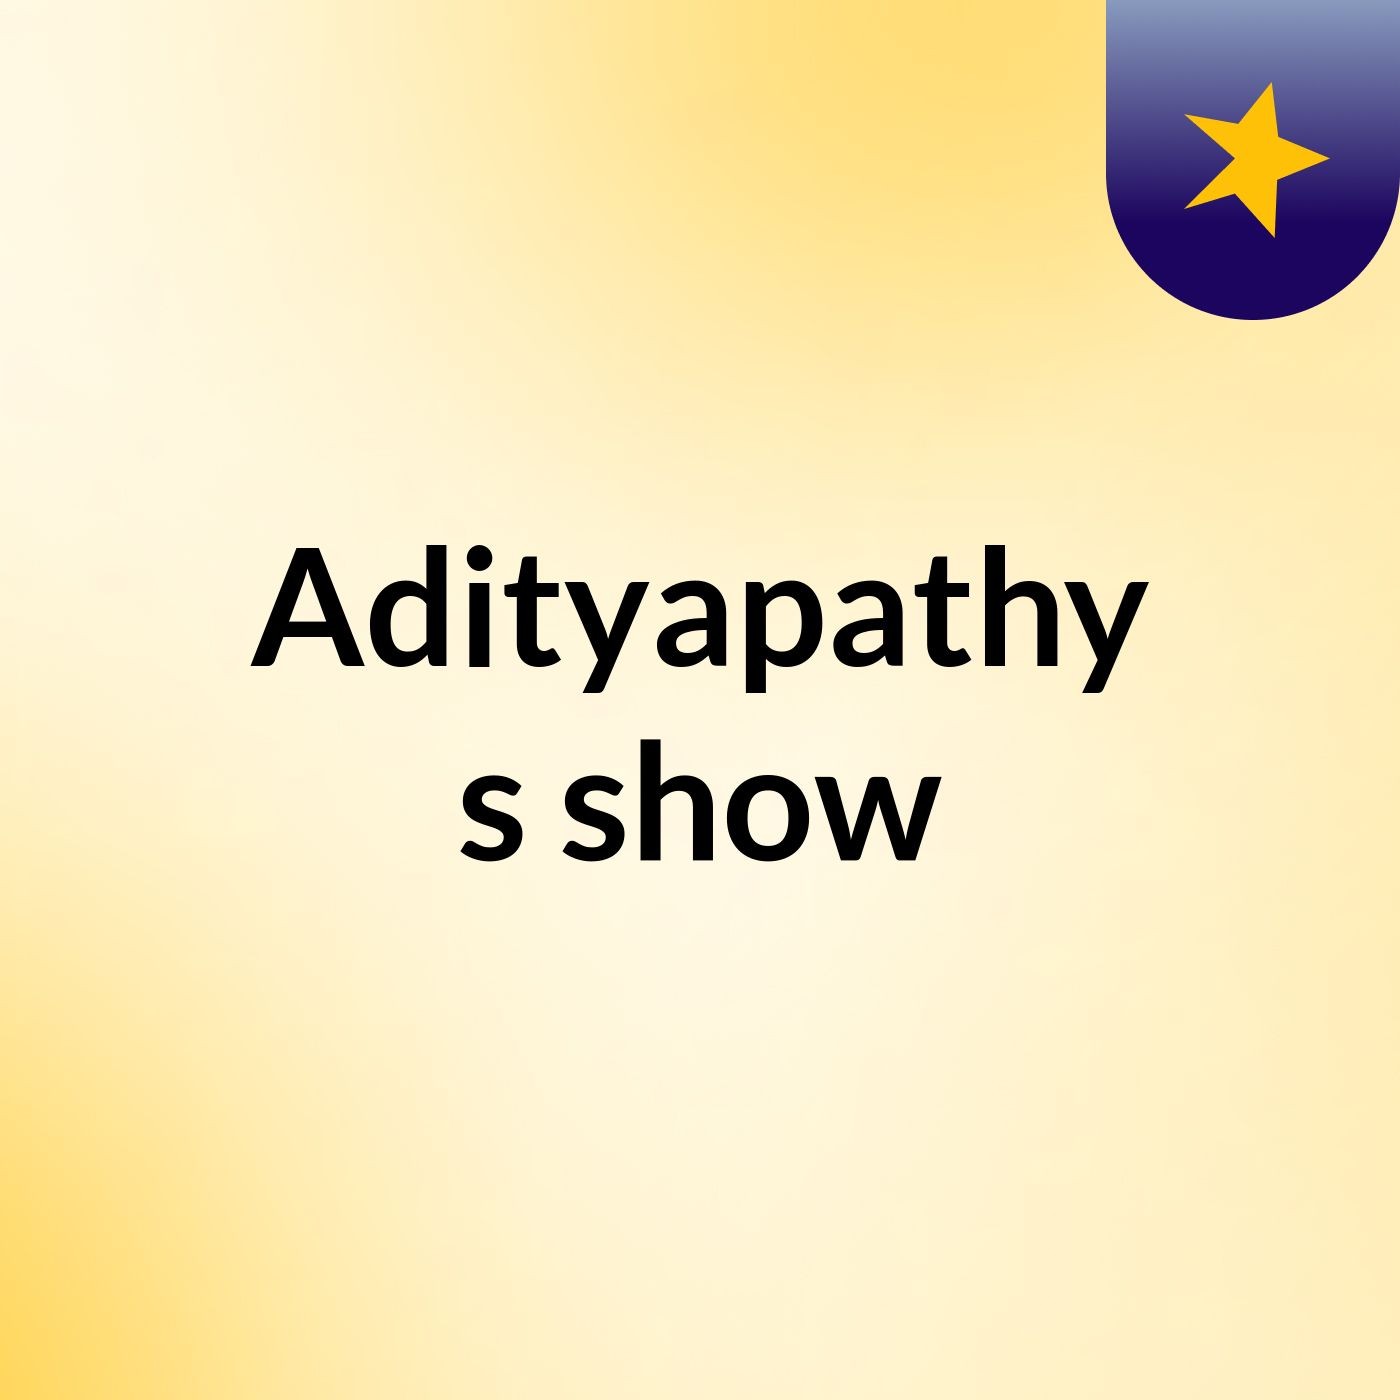 Adityapathy's show